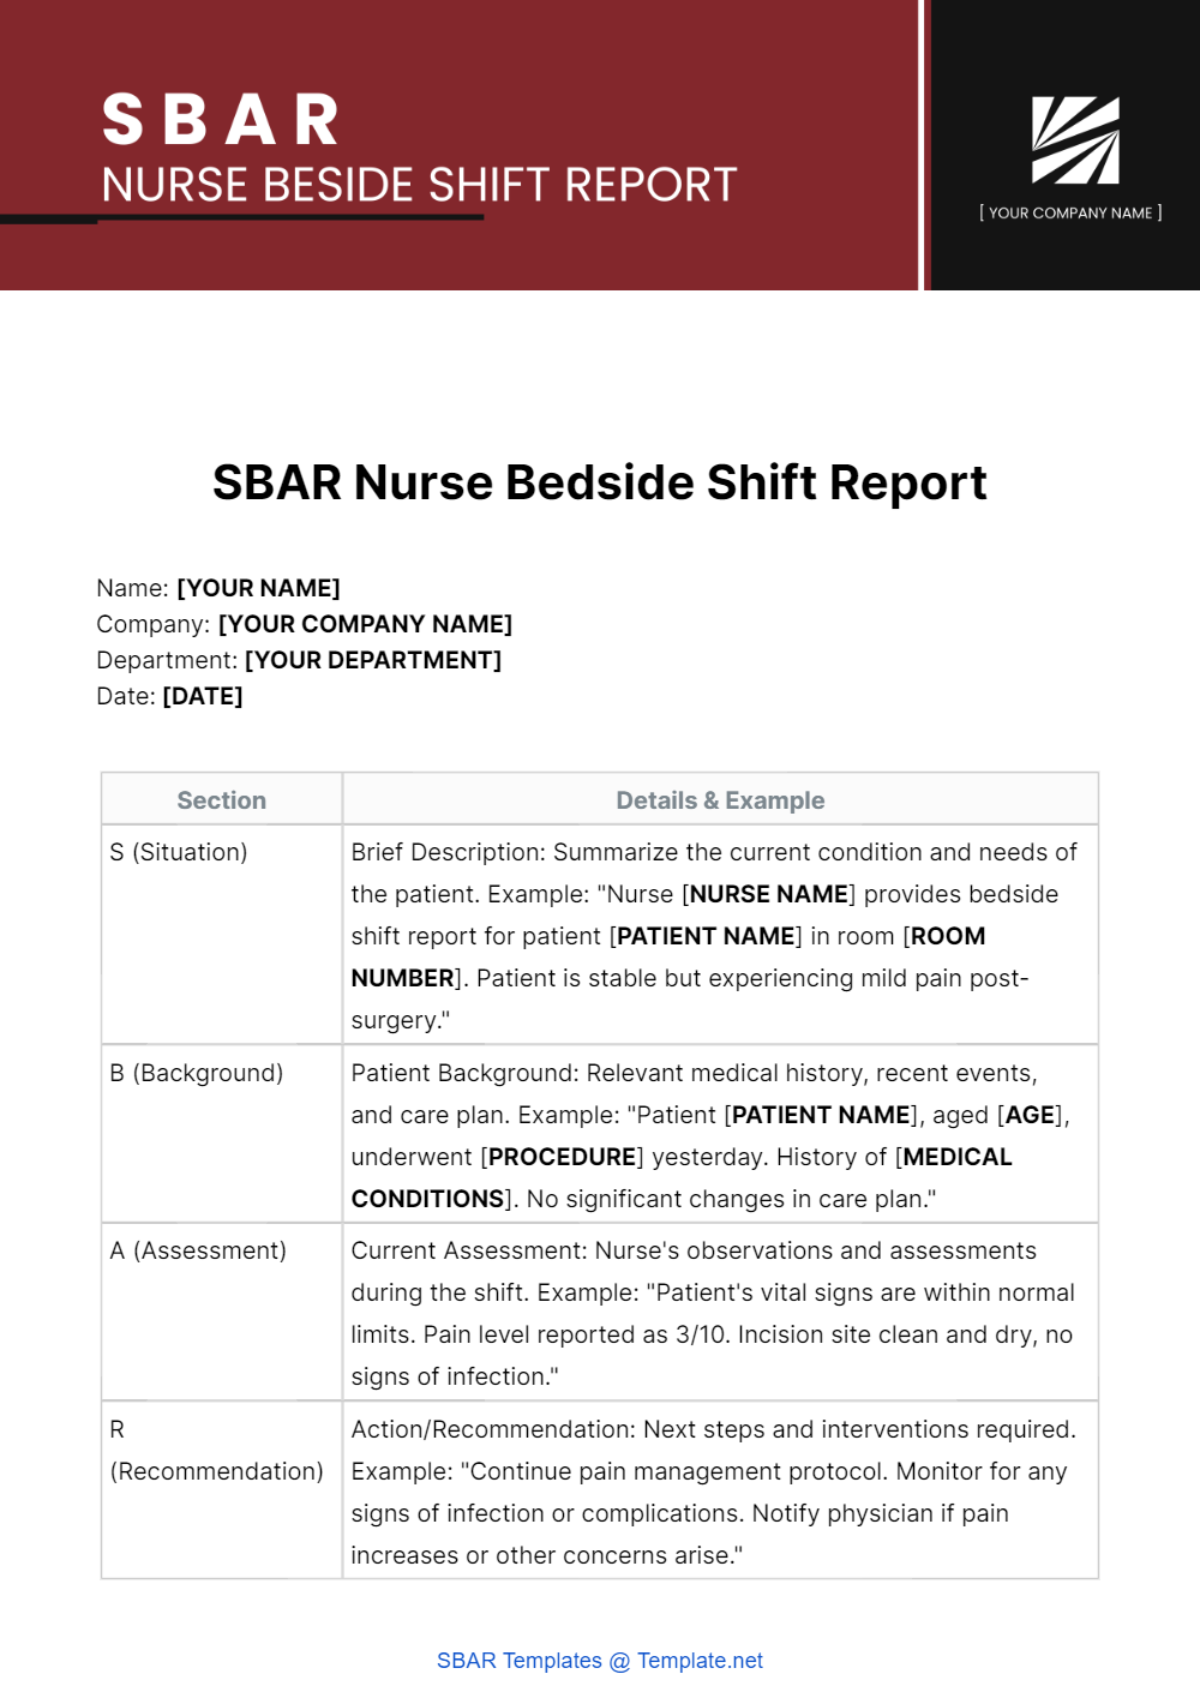 Free SBAR Nurse Bedside Shift Report Template